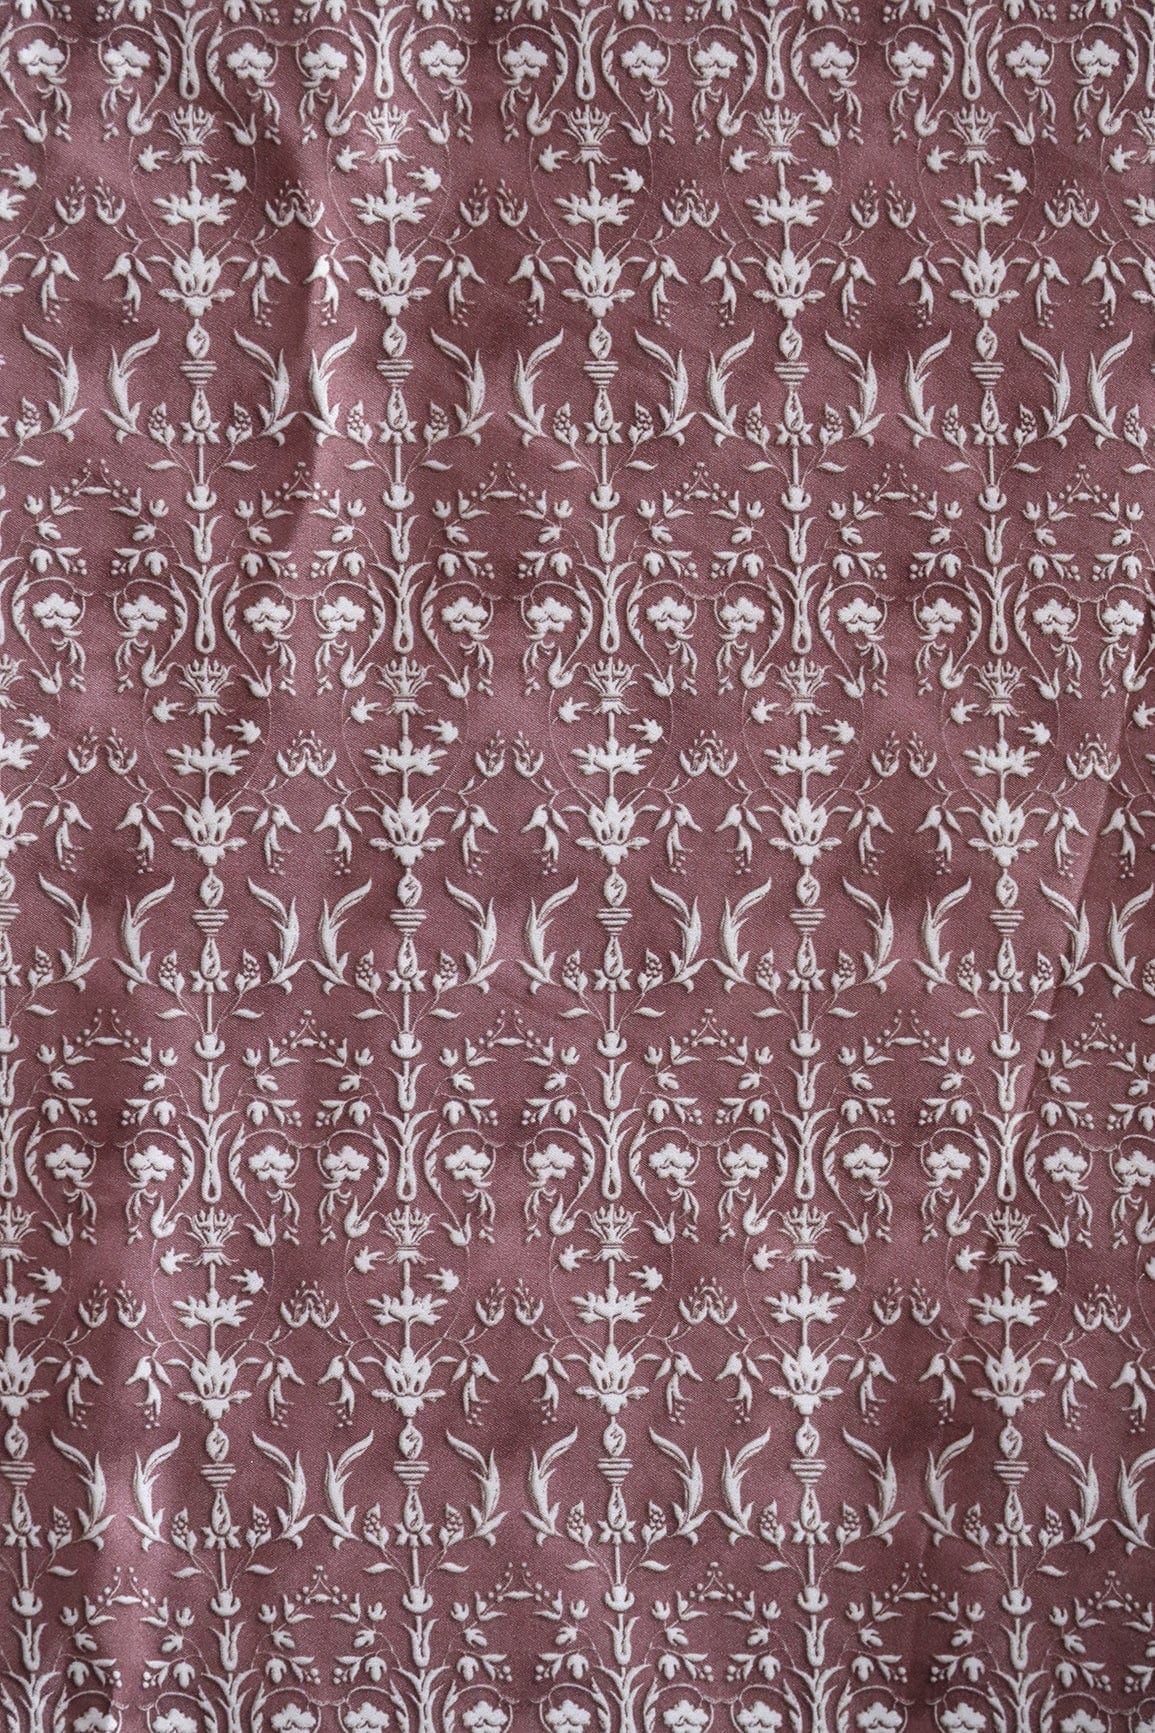 doeraa Prints Mauve Ethnic Pattern Digital Print On Satin Fabric